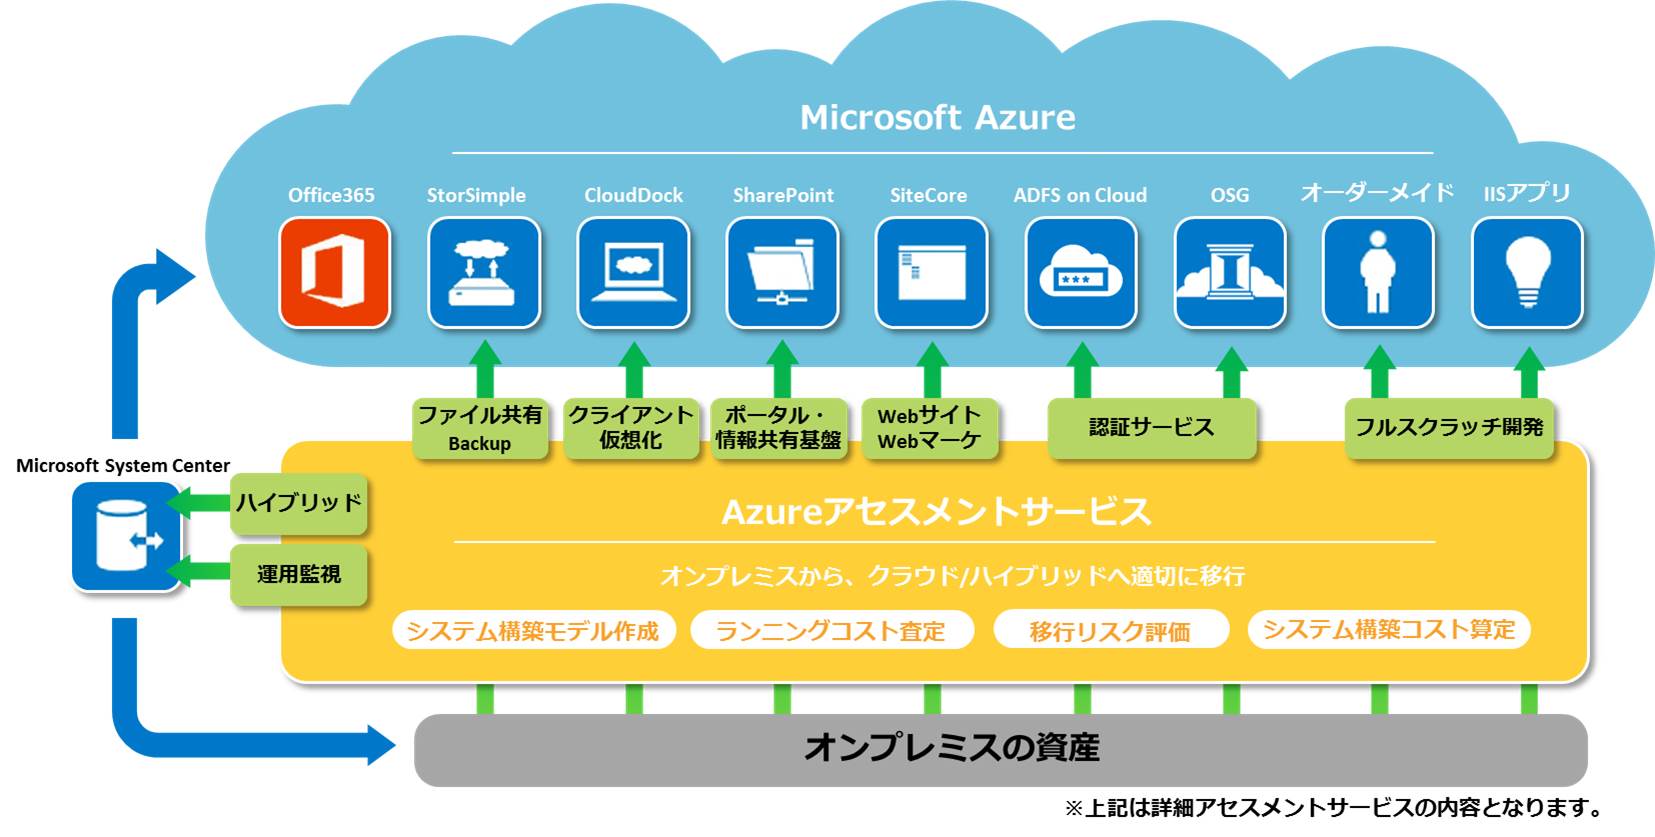 Microsoft Azure アセスメントサービス